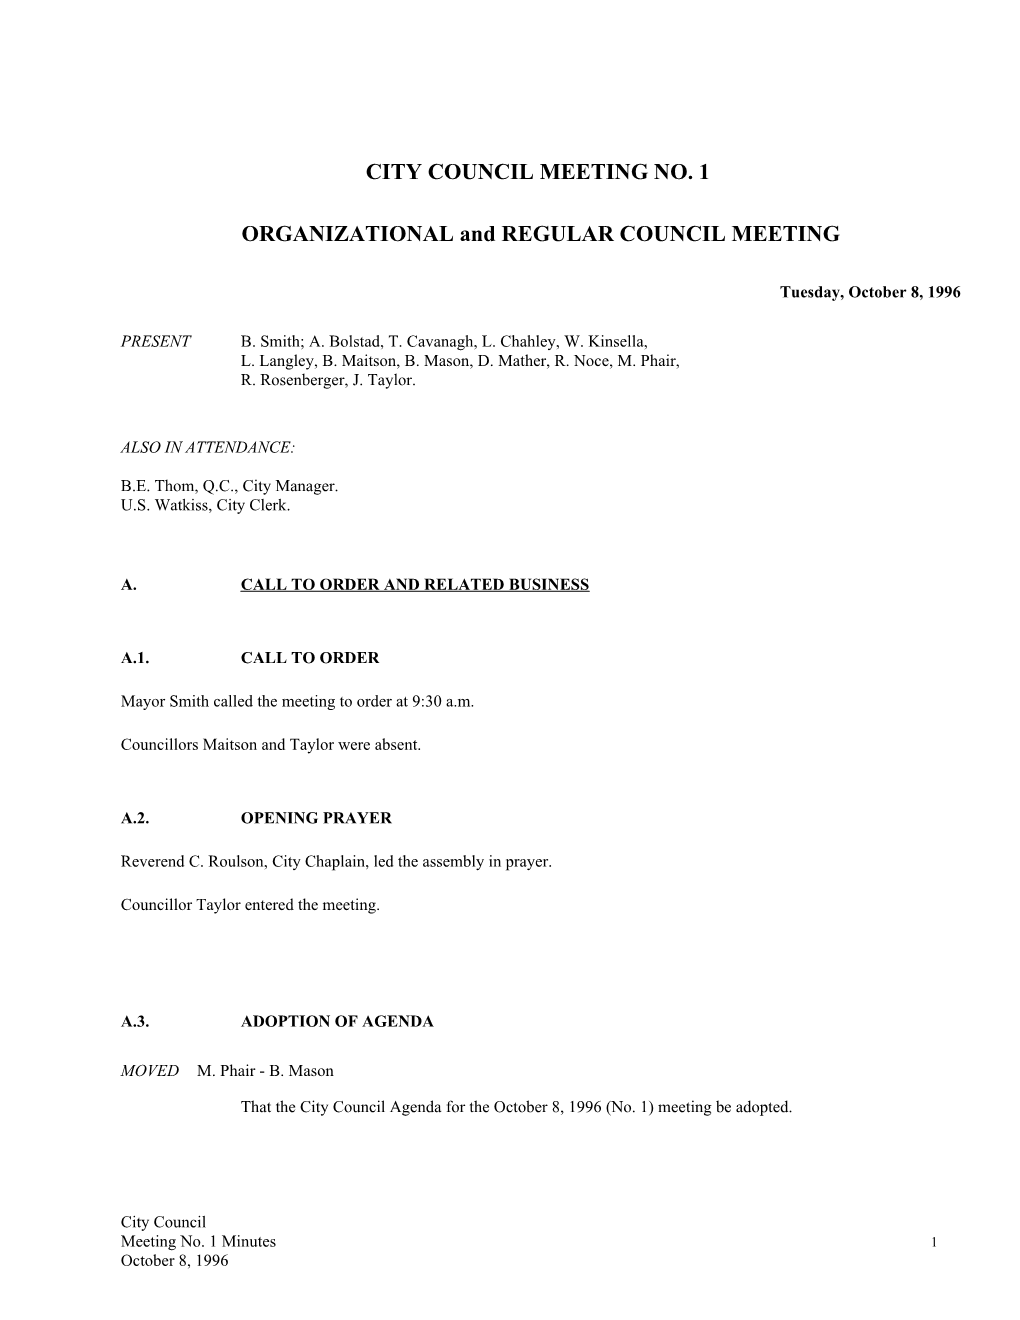 City Council Meeting No. 1